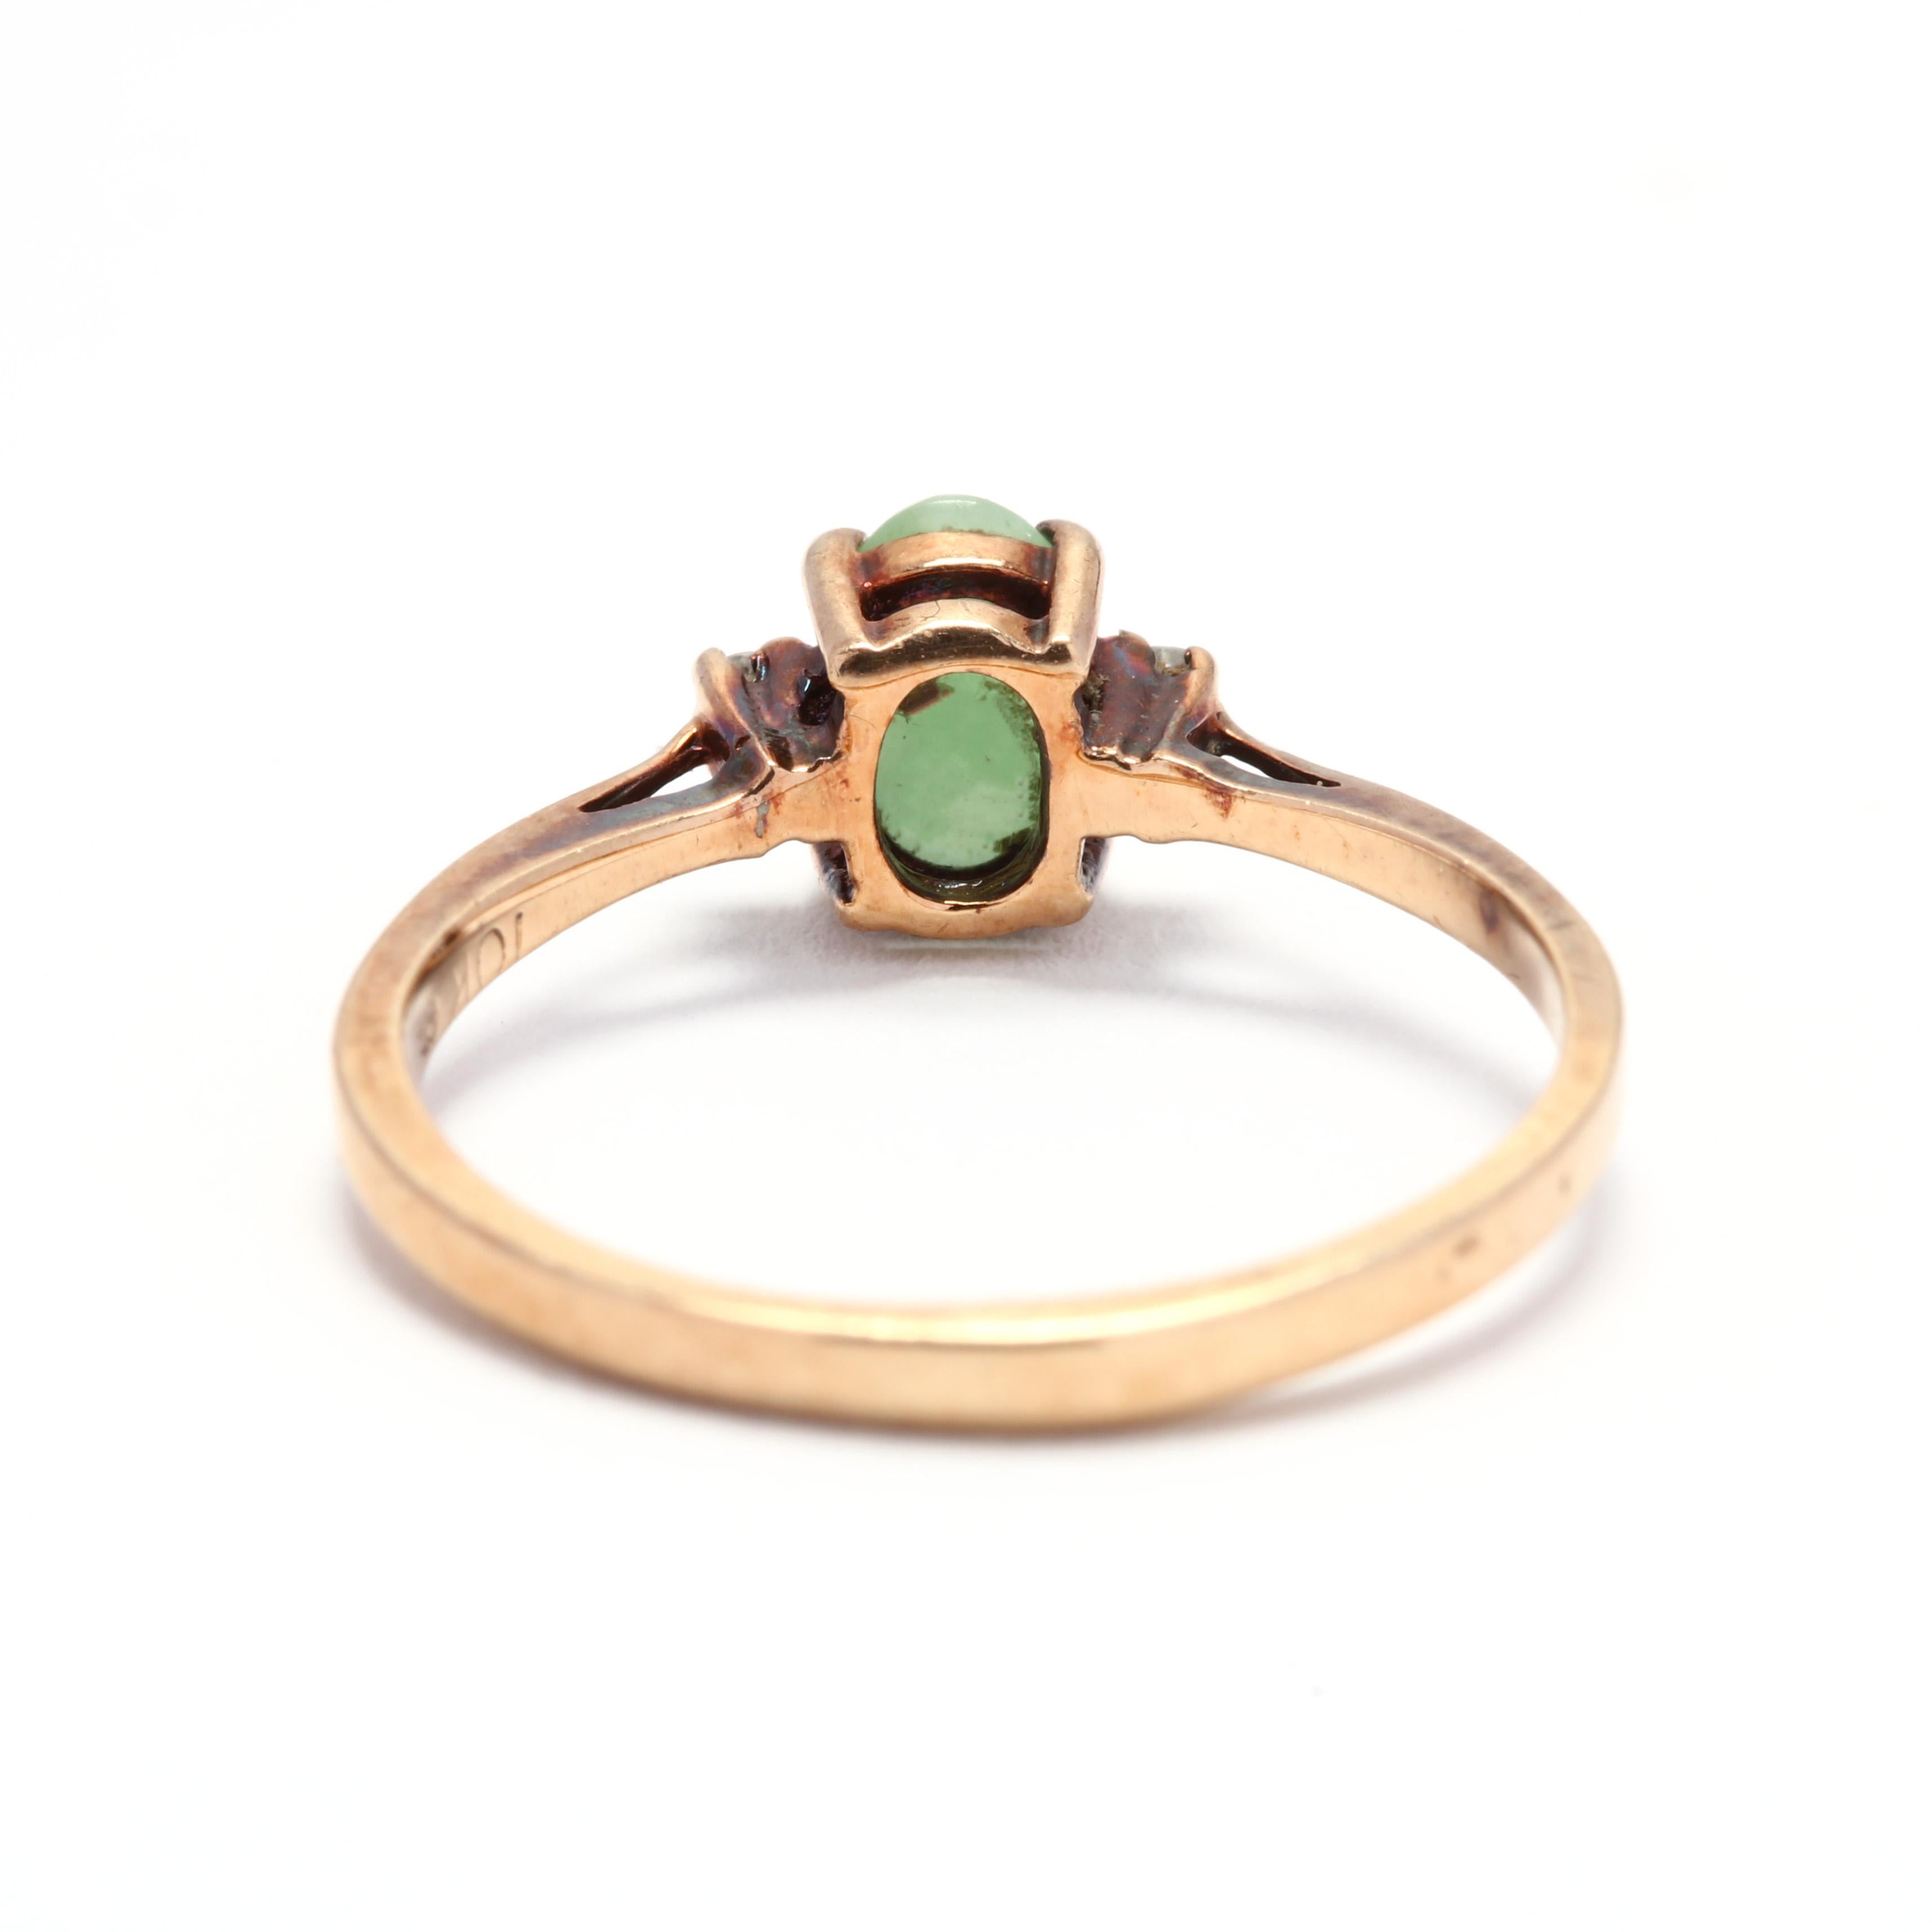 Oval Cut 10 Karat Gold, Jade and Diamond Ring